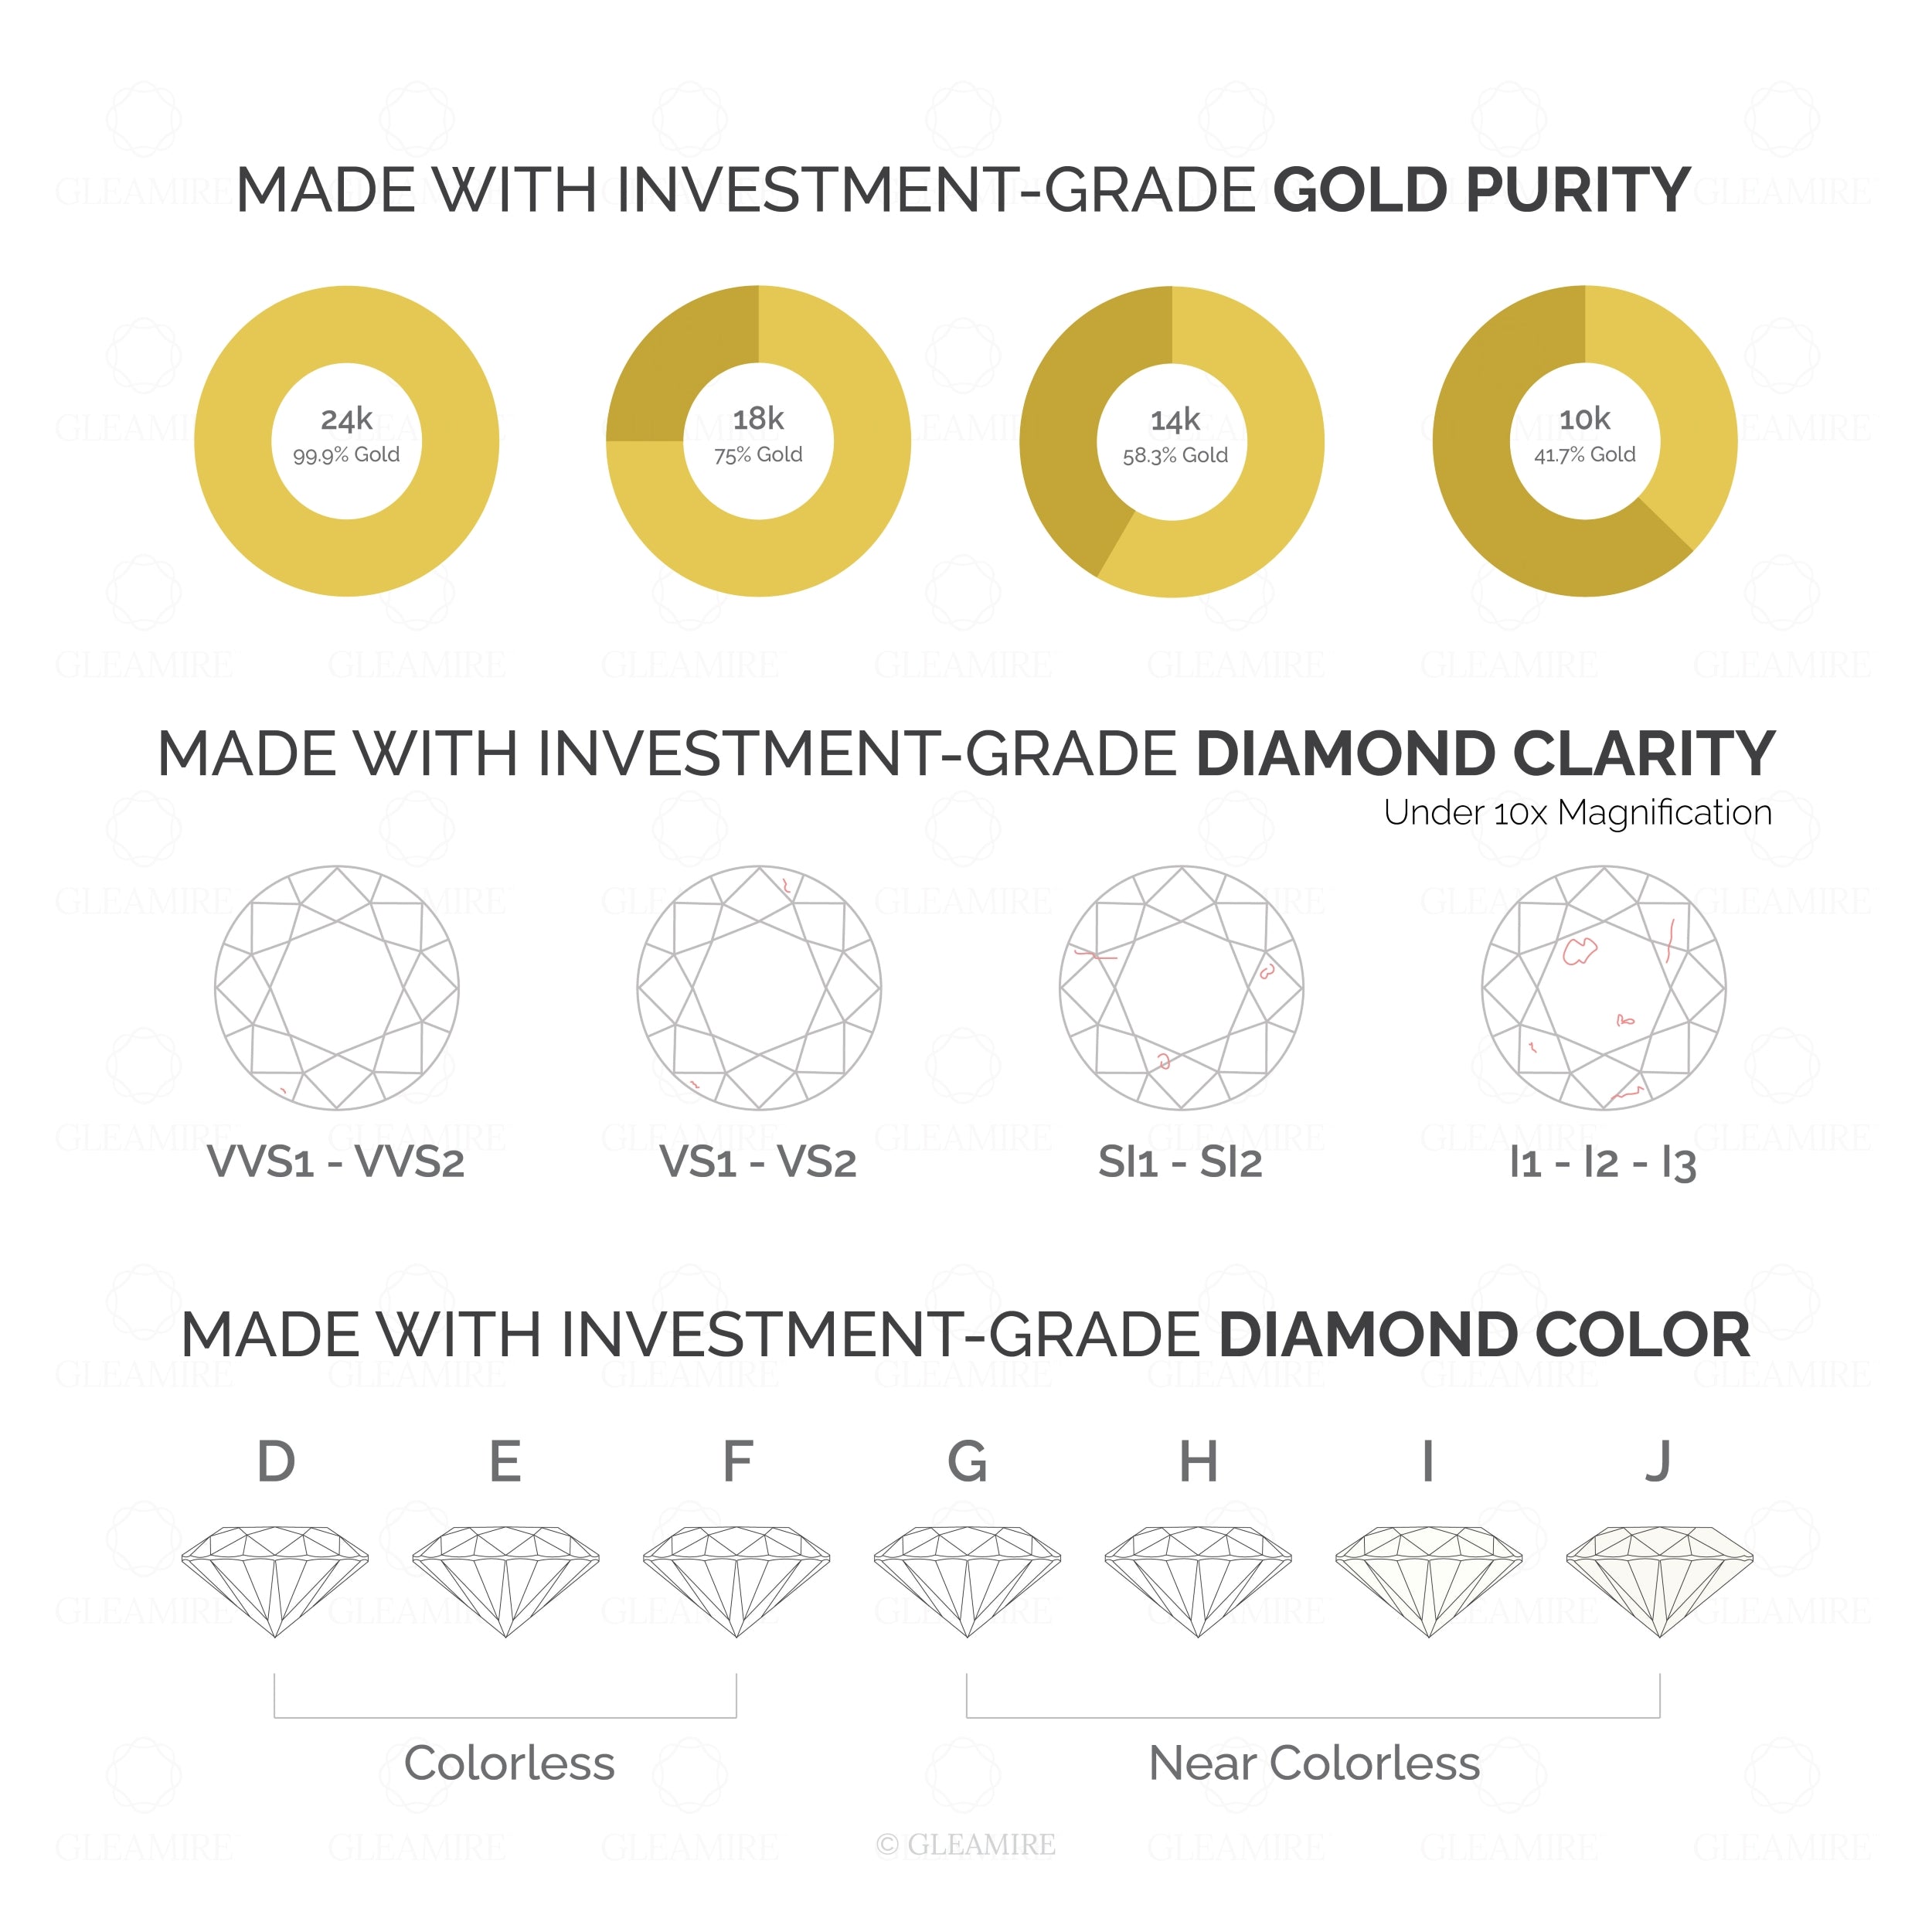 Certified 14K Gold 0.4ct Natural Diamond Designer Hash Charm Stud Yellow Earrings